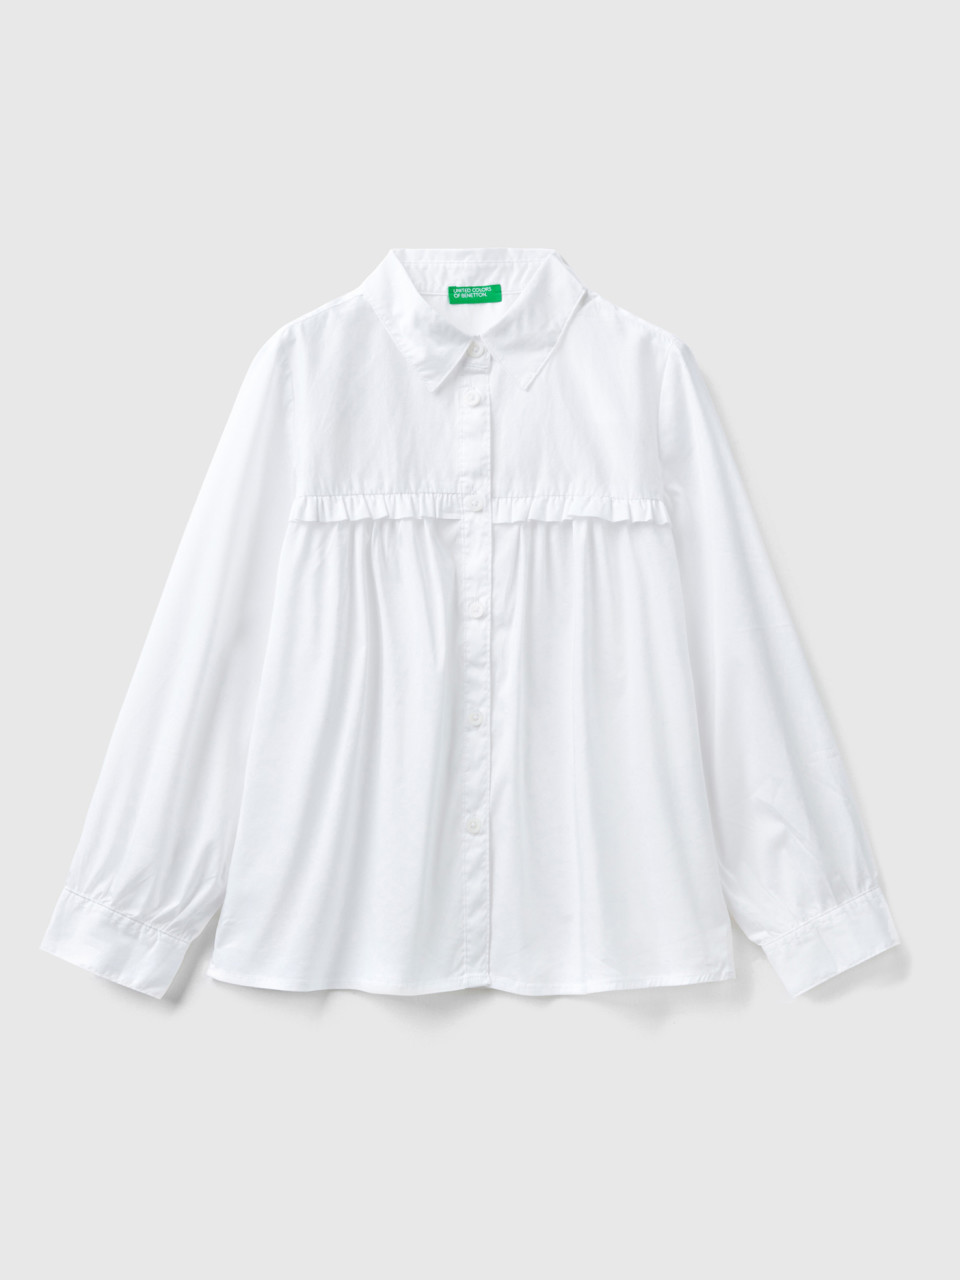 Benetton, Shirt With Rouches On The Yoke, White, Kids